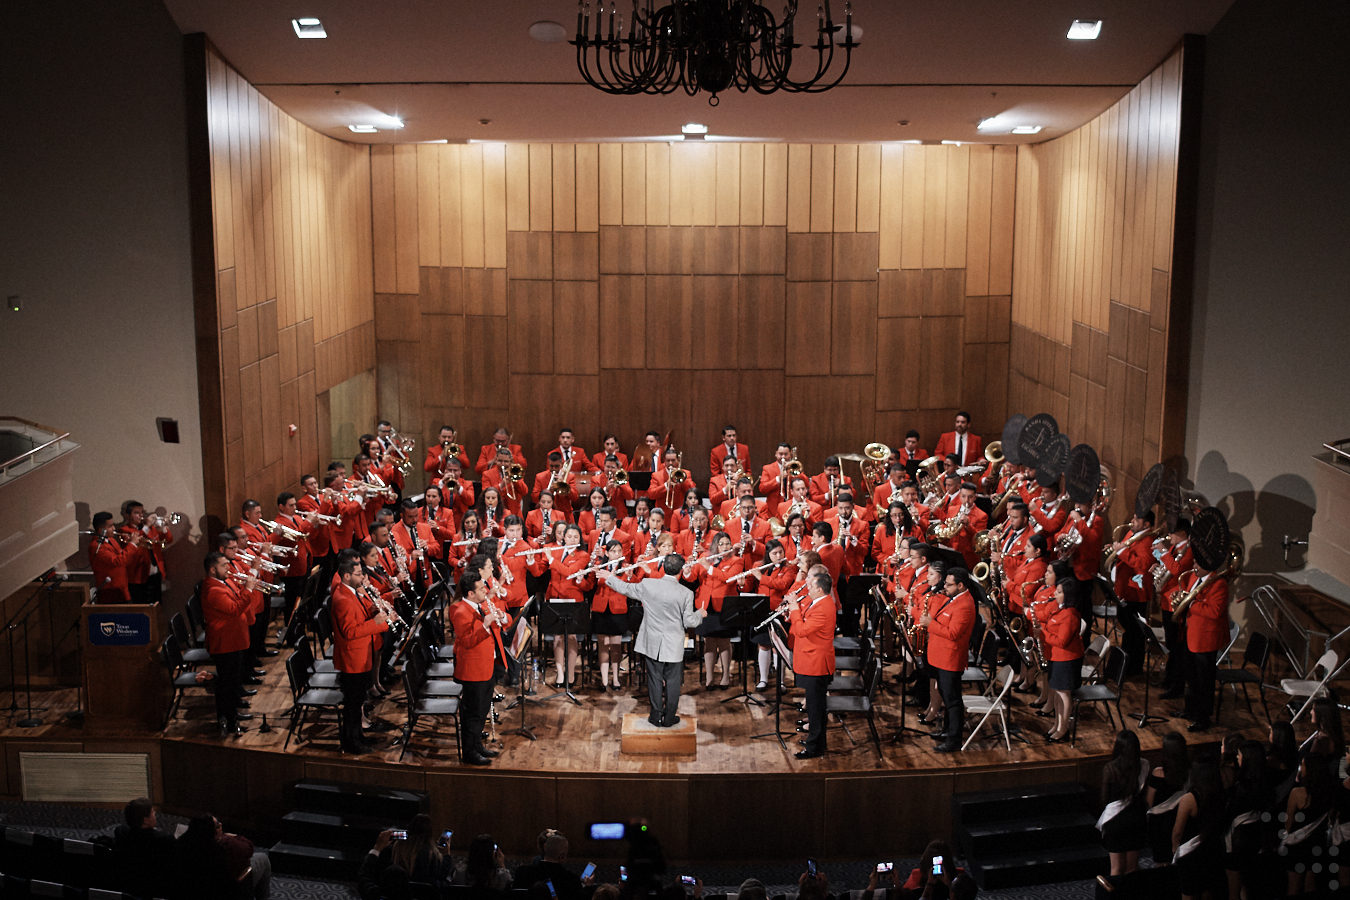  Banda Sinfonica de Zacatecas performance on Jan. 18 was a huge success!